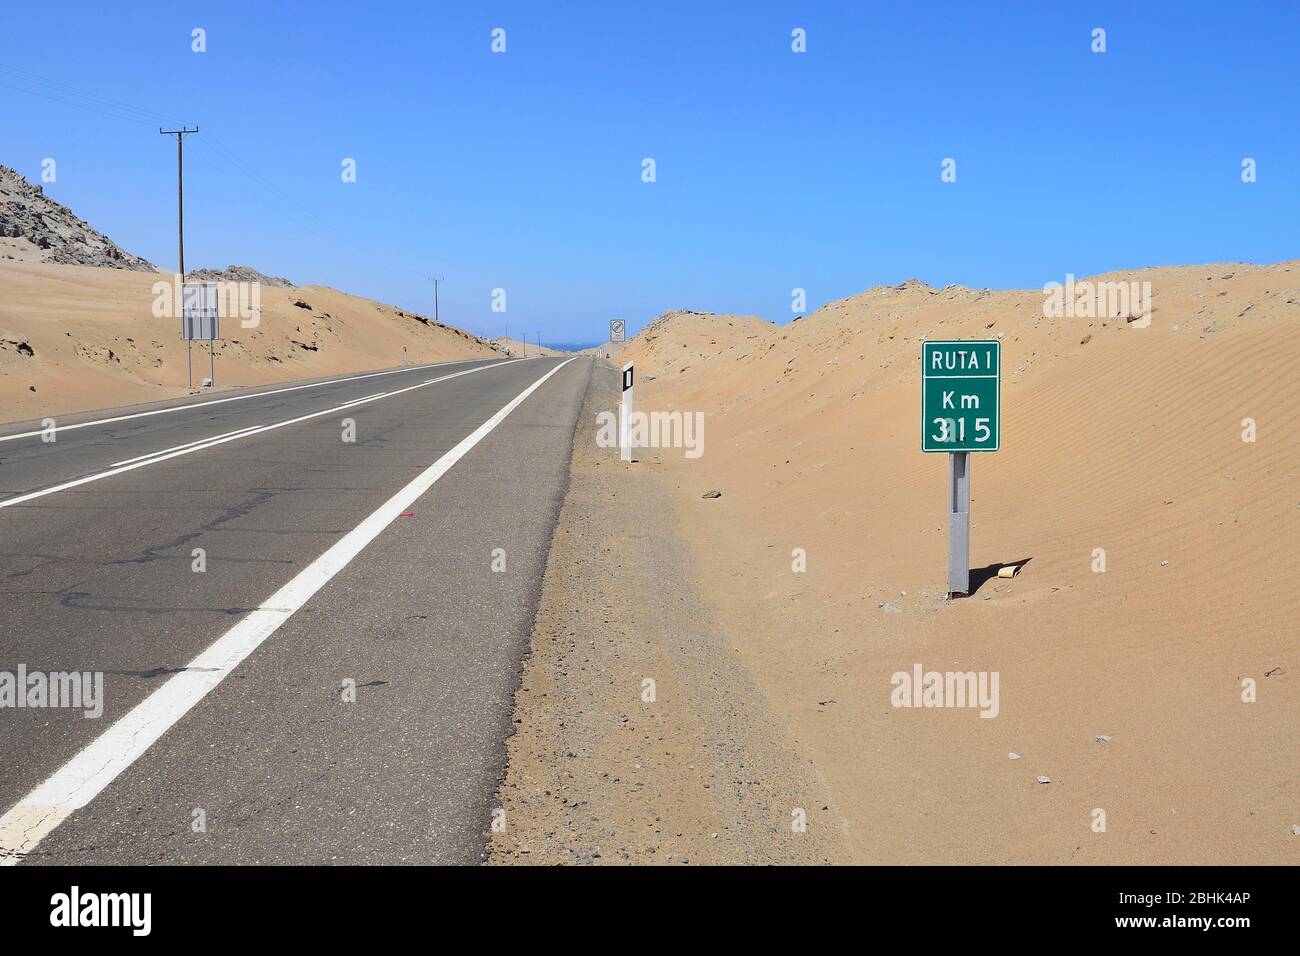 Sign with kilometre indication, Ruta 1, Tarapaca region, Chile Stock Photo